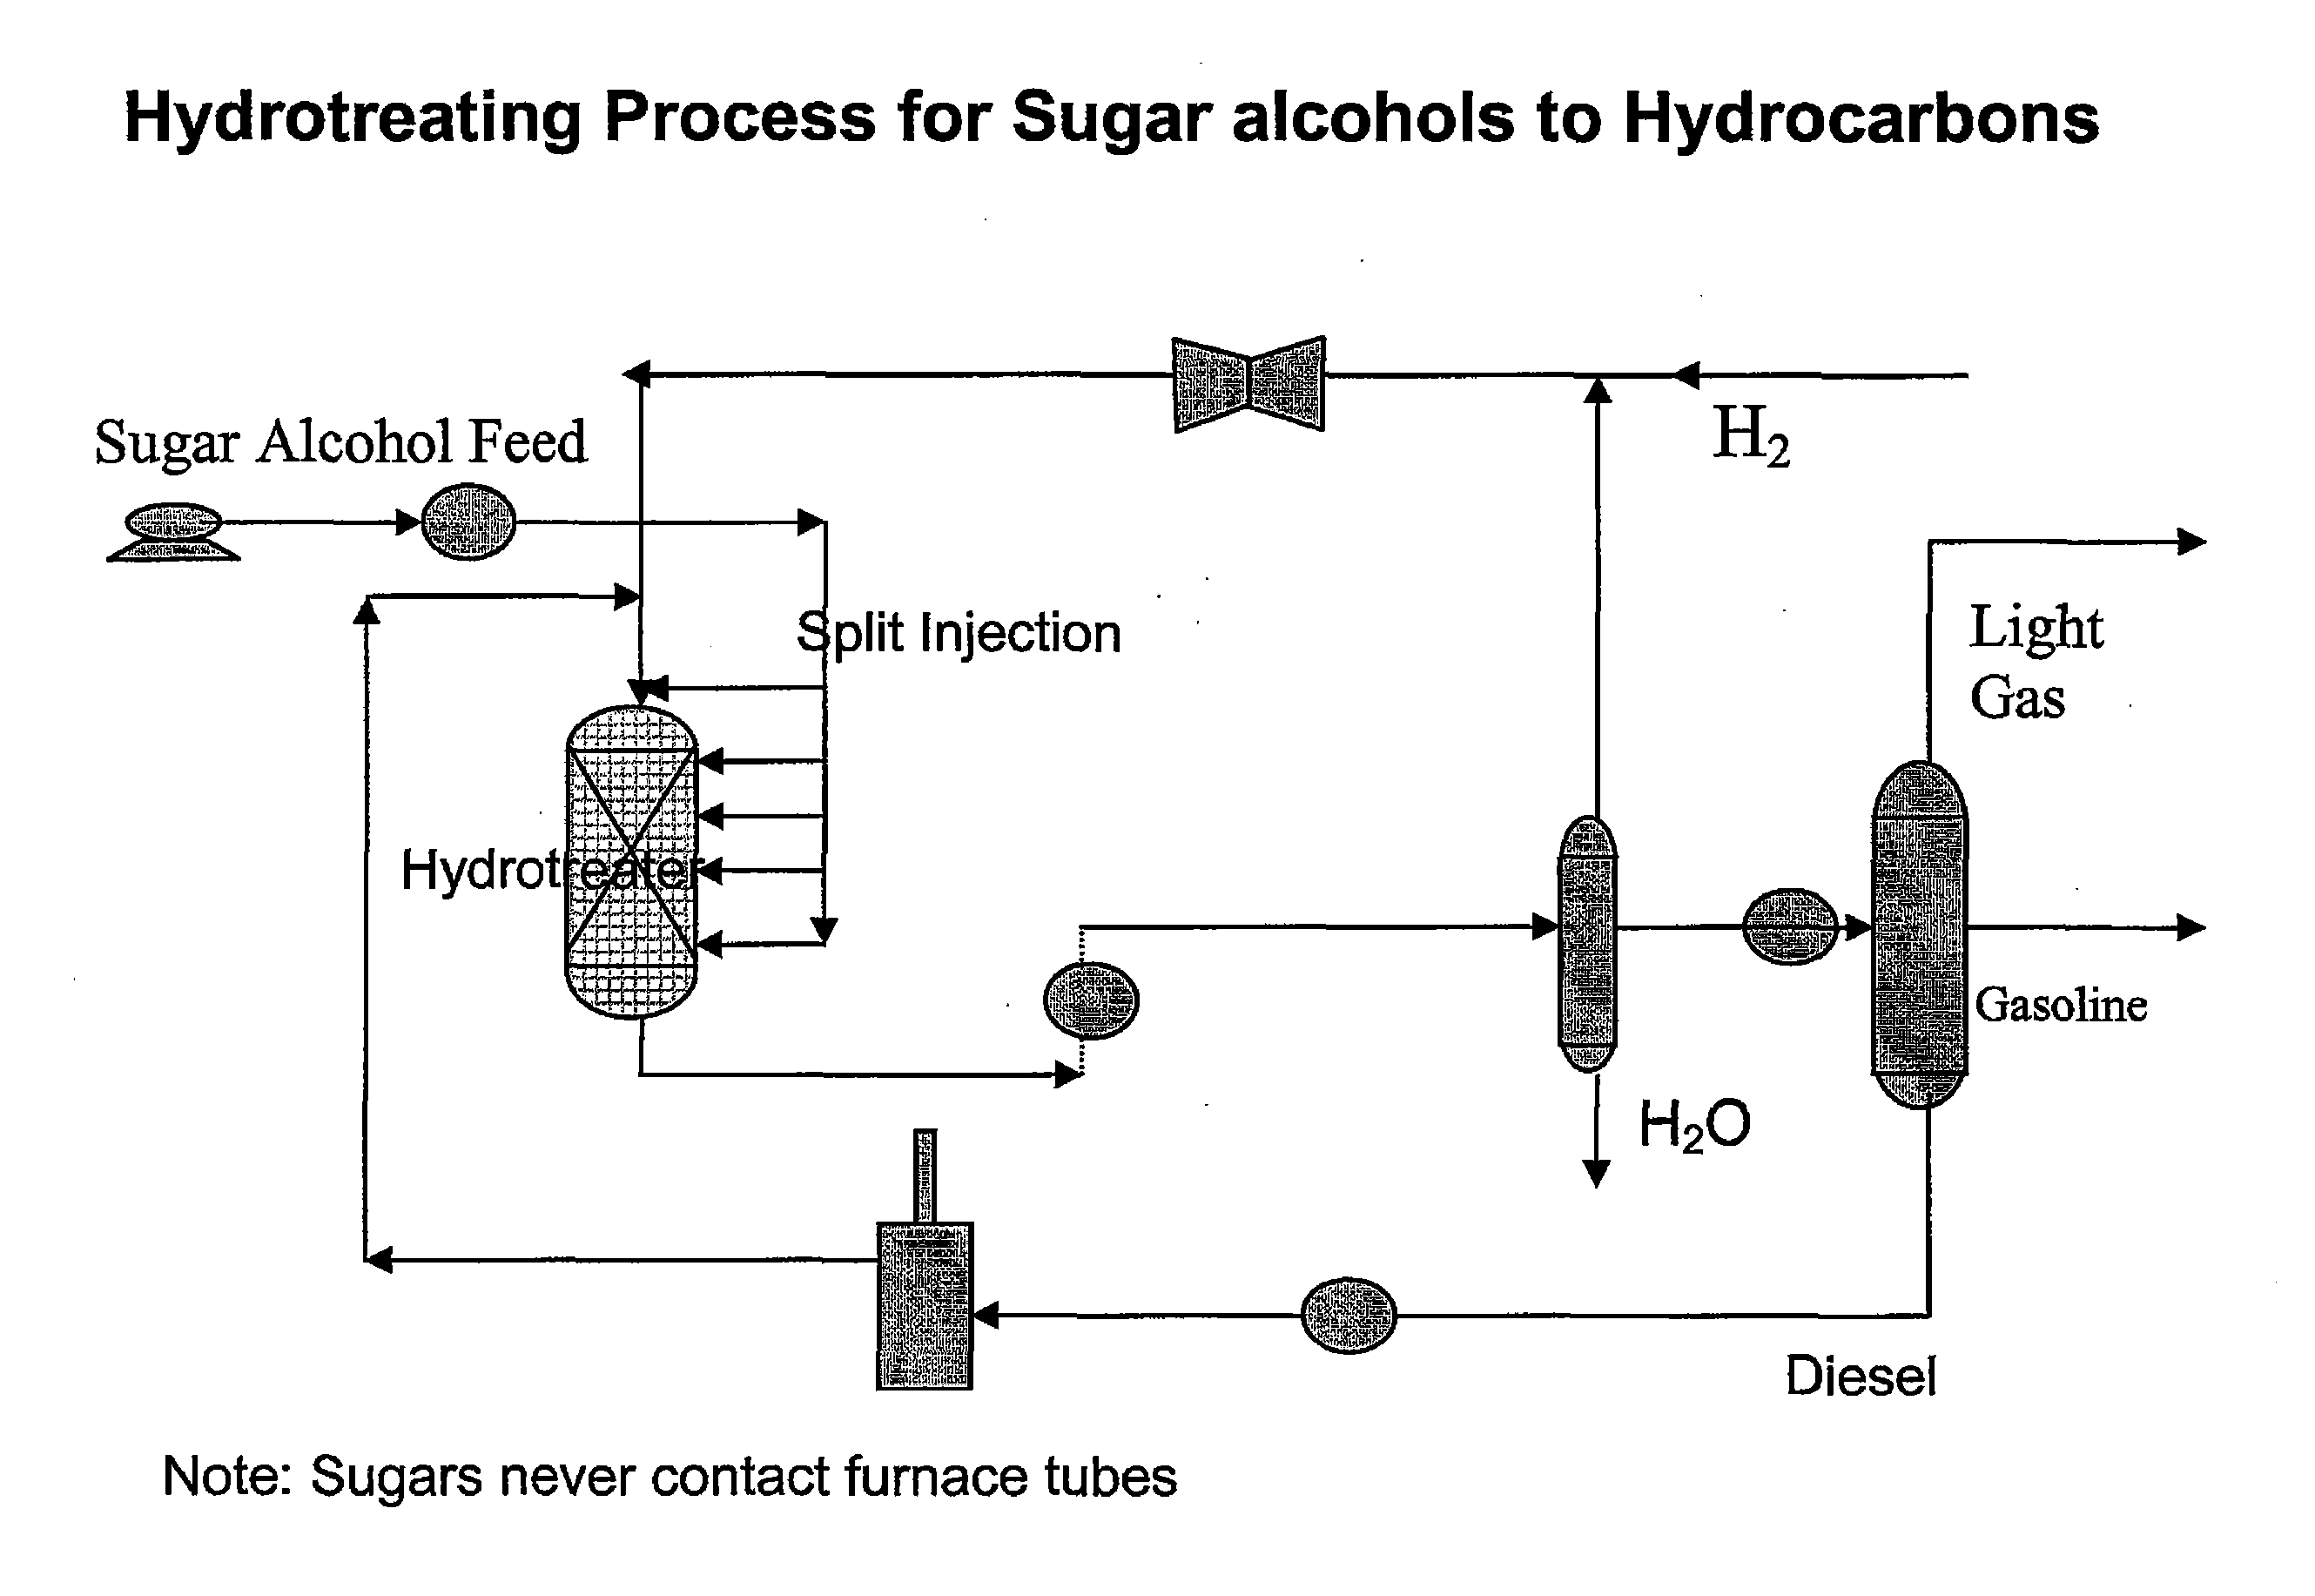 Sugar alcohol split injection conversion